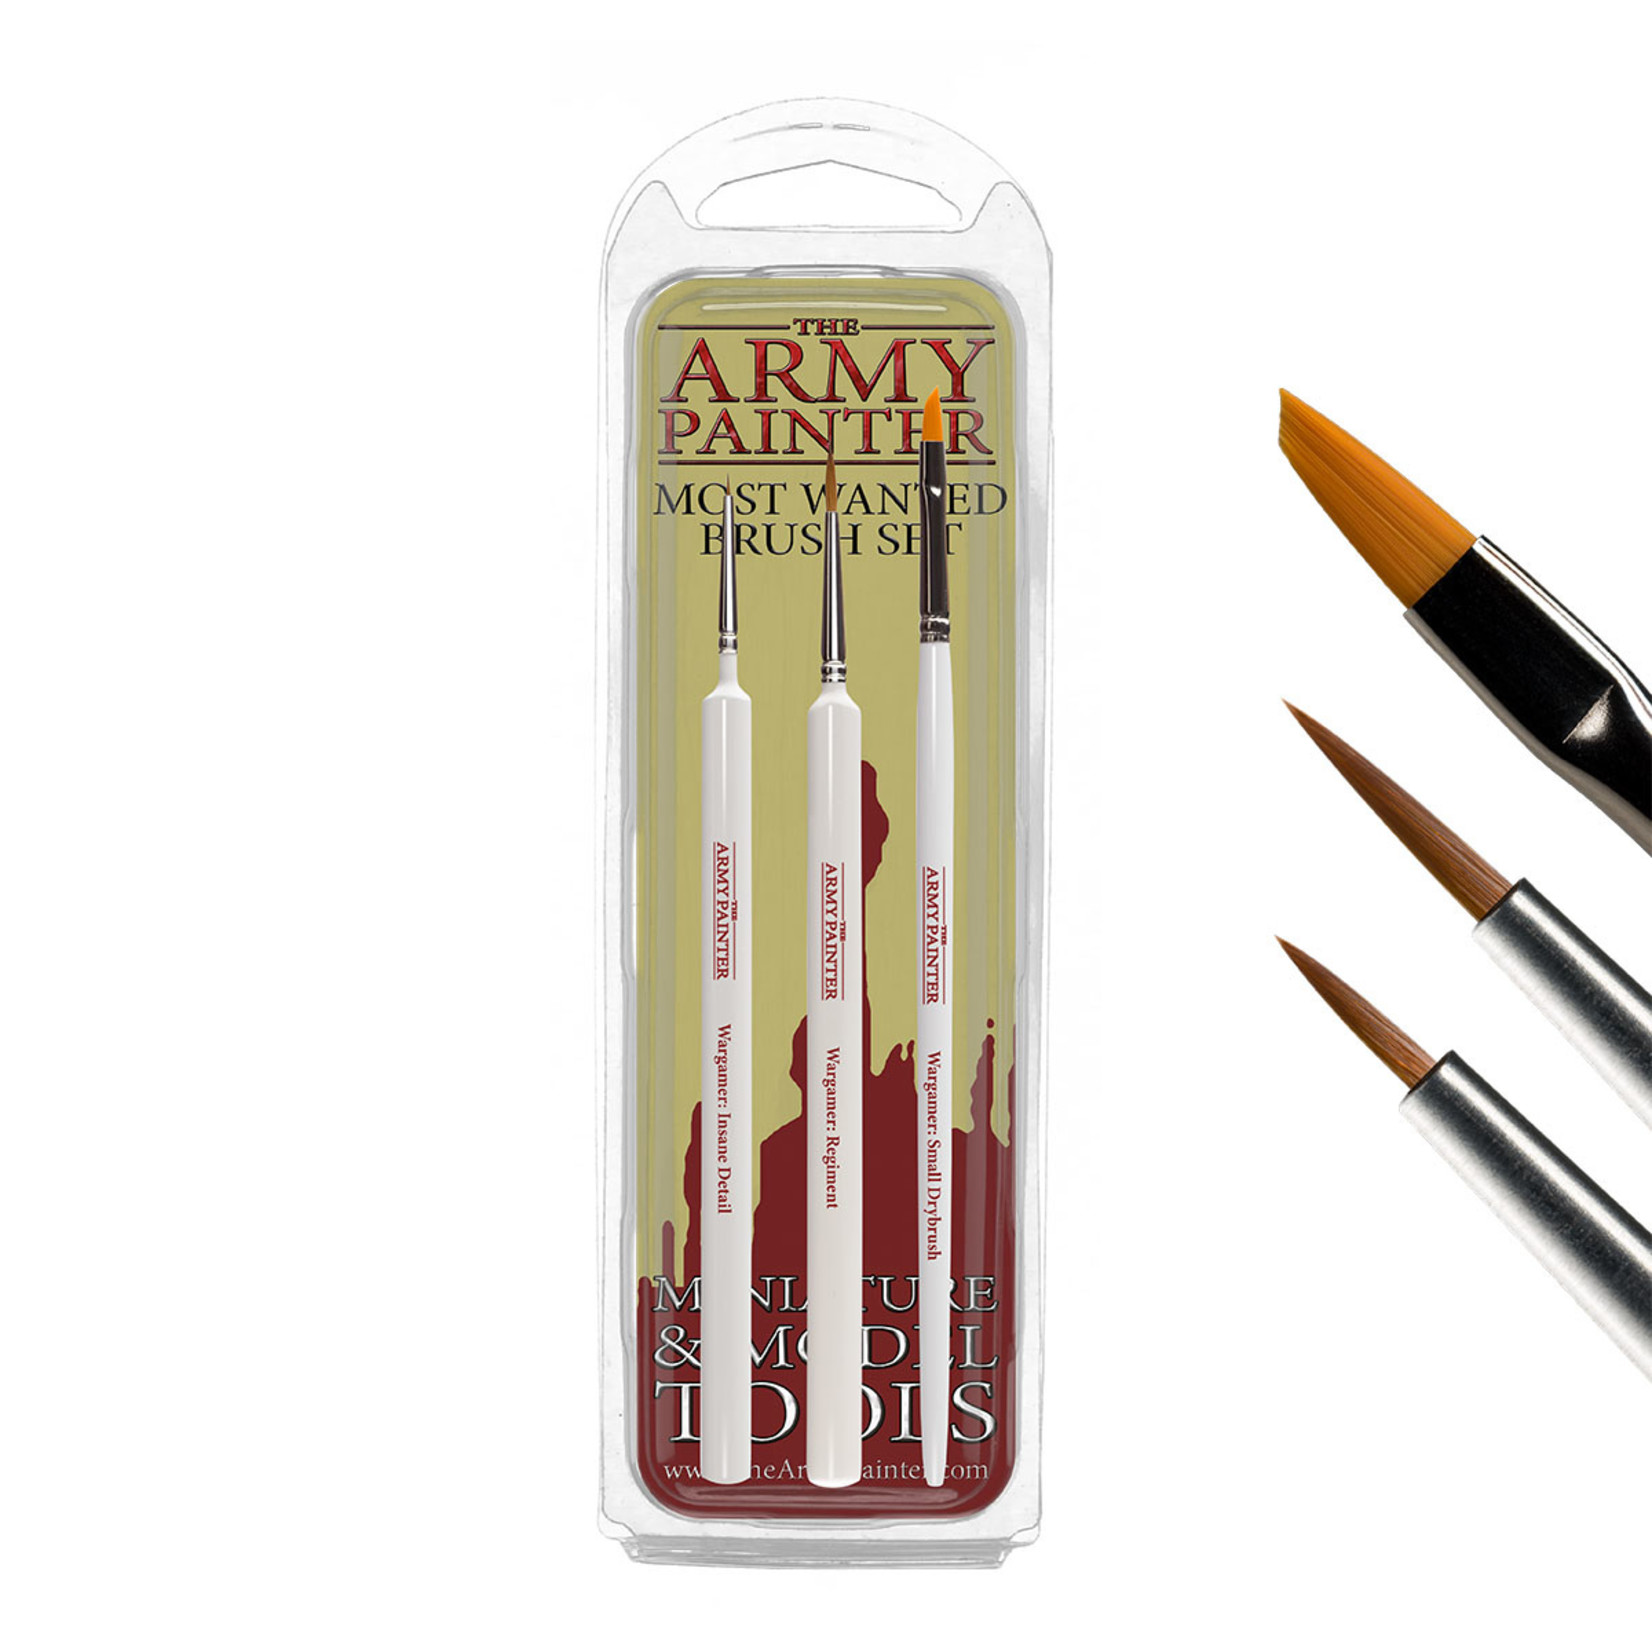 Army Painter Brush: Wargamer: Most Wanted Brush Set